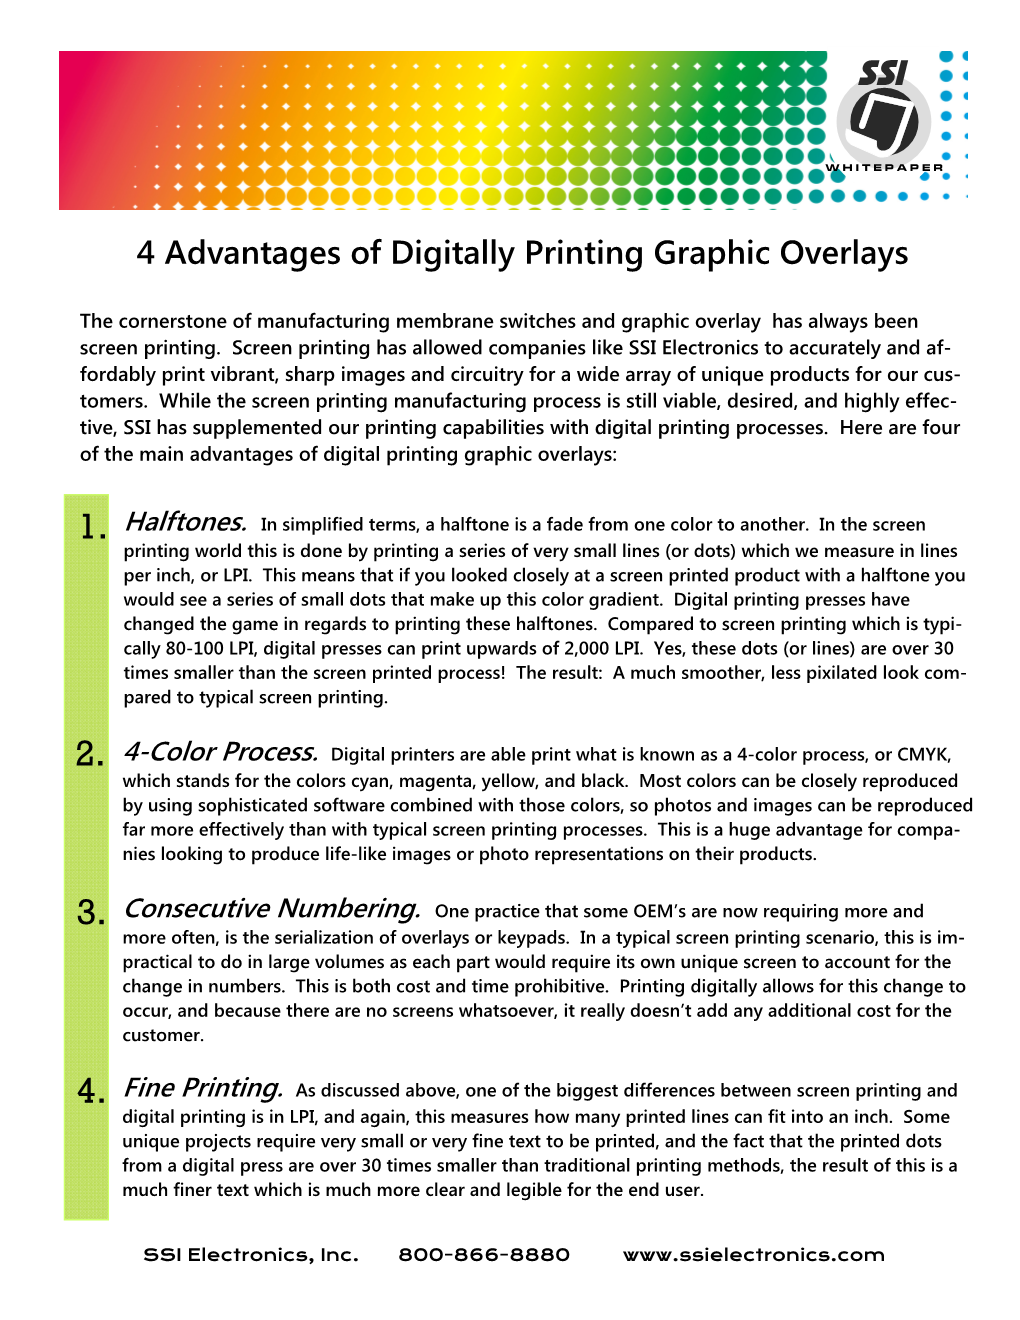 Digital Printing Advantages